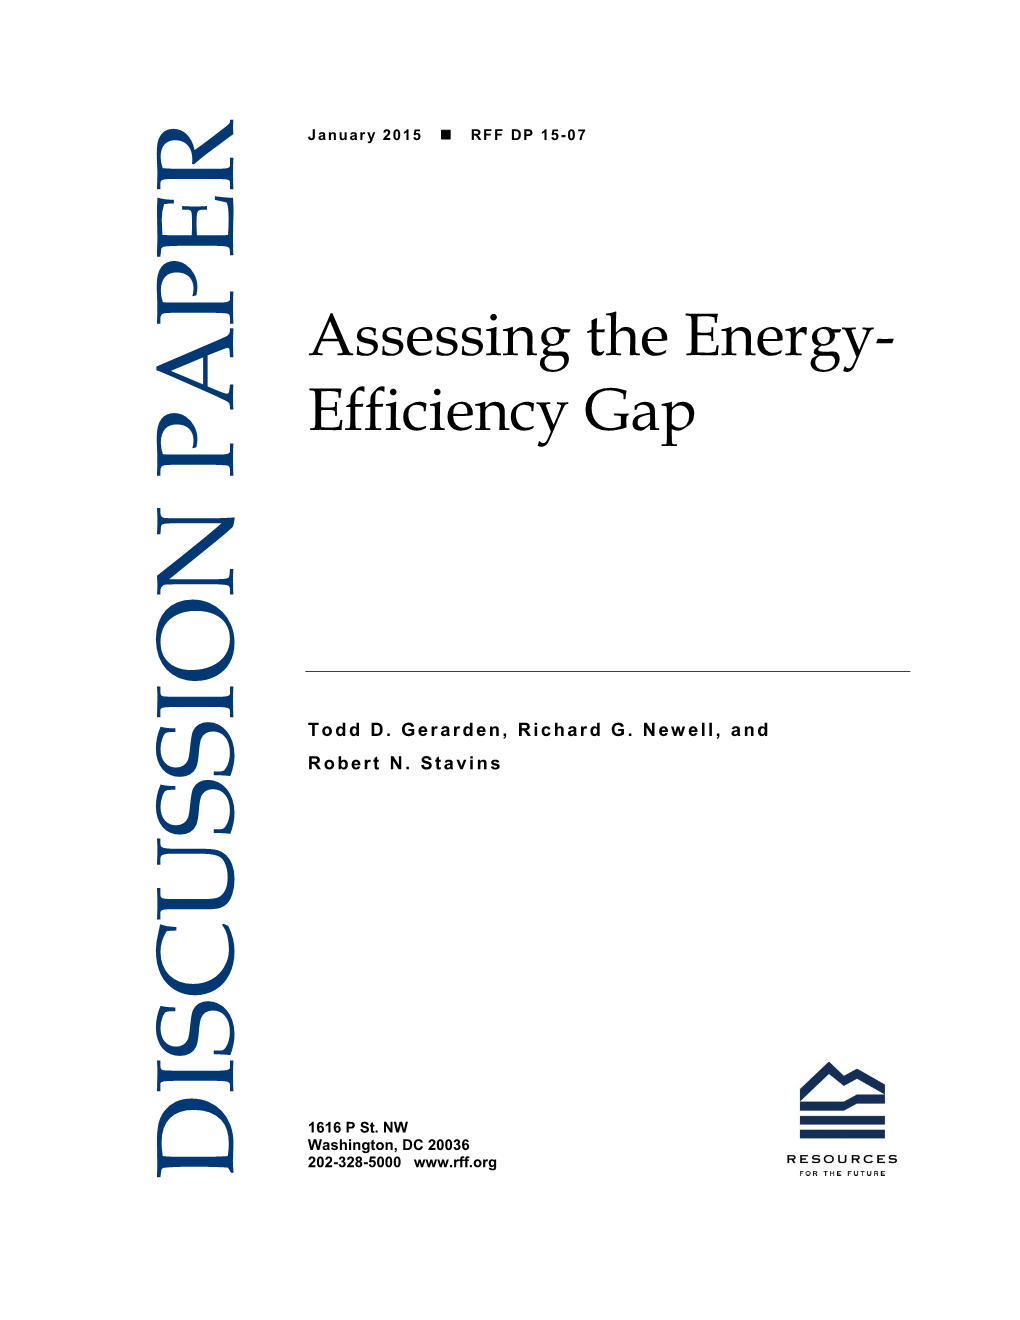 Energy-Efficiency Gap.” Cambridge, Mass.: Harvard Environmental Economics Program, January 2015